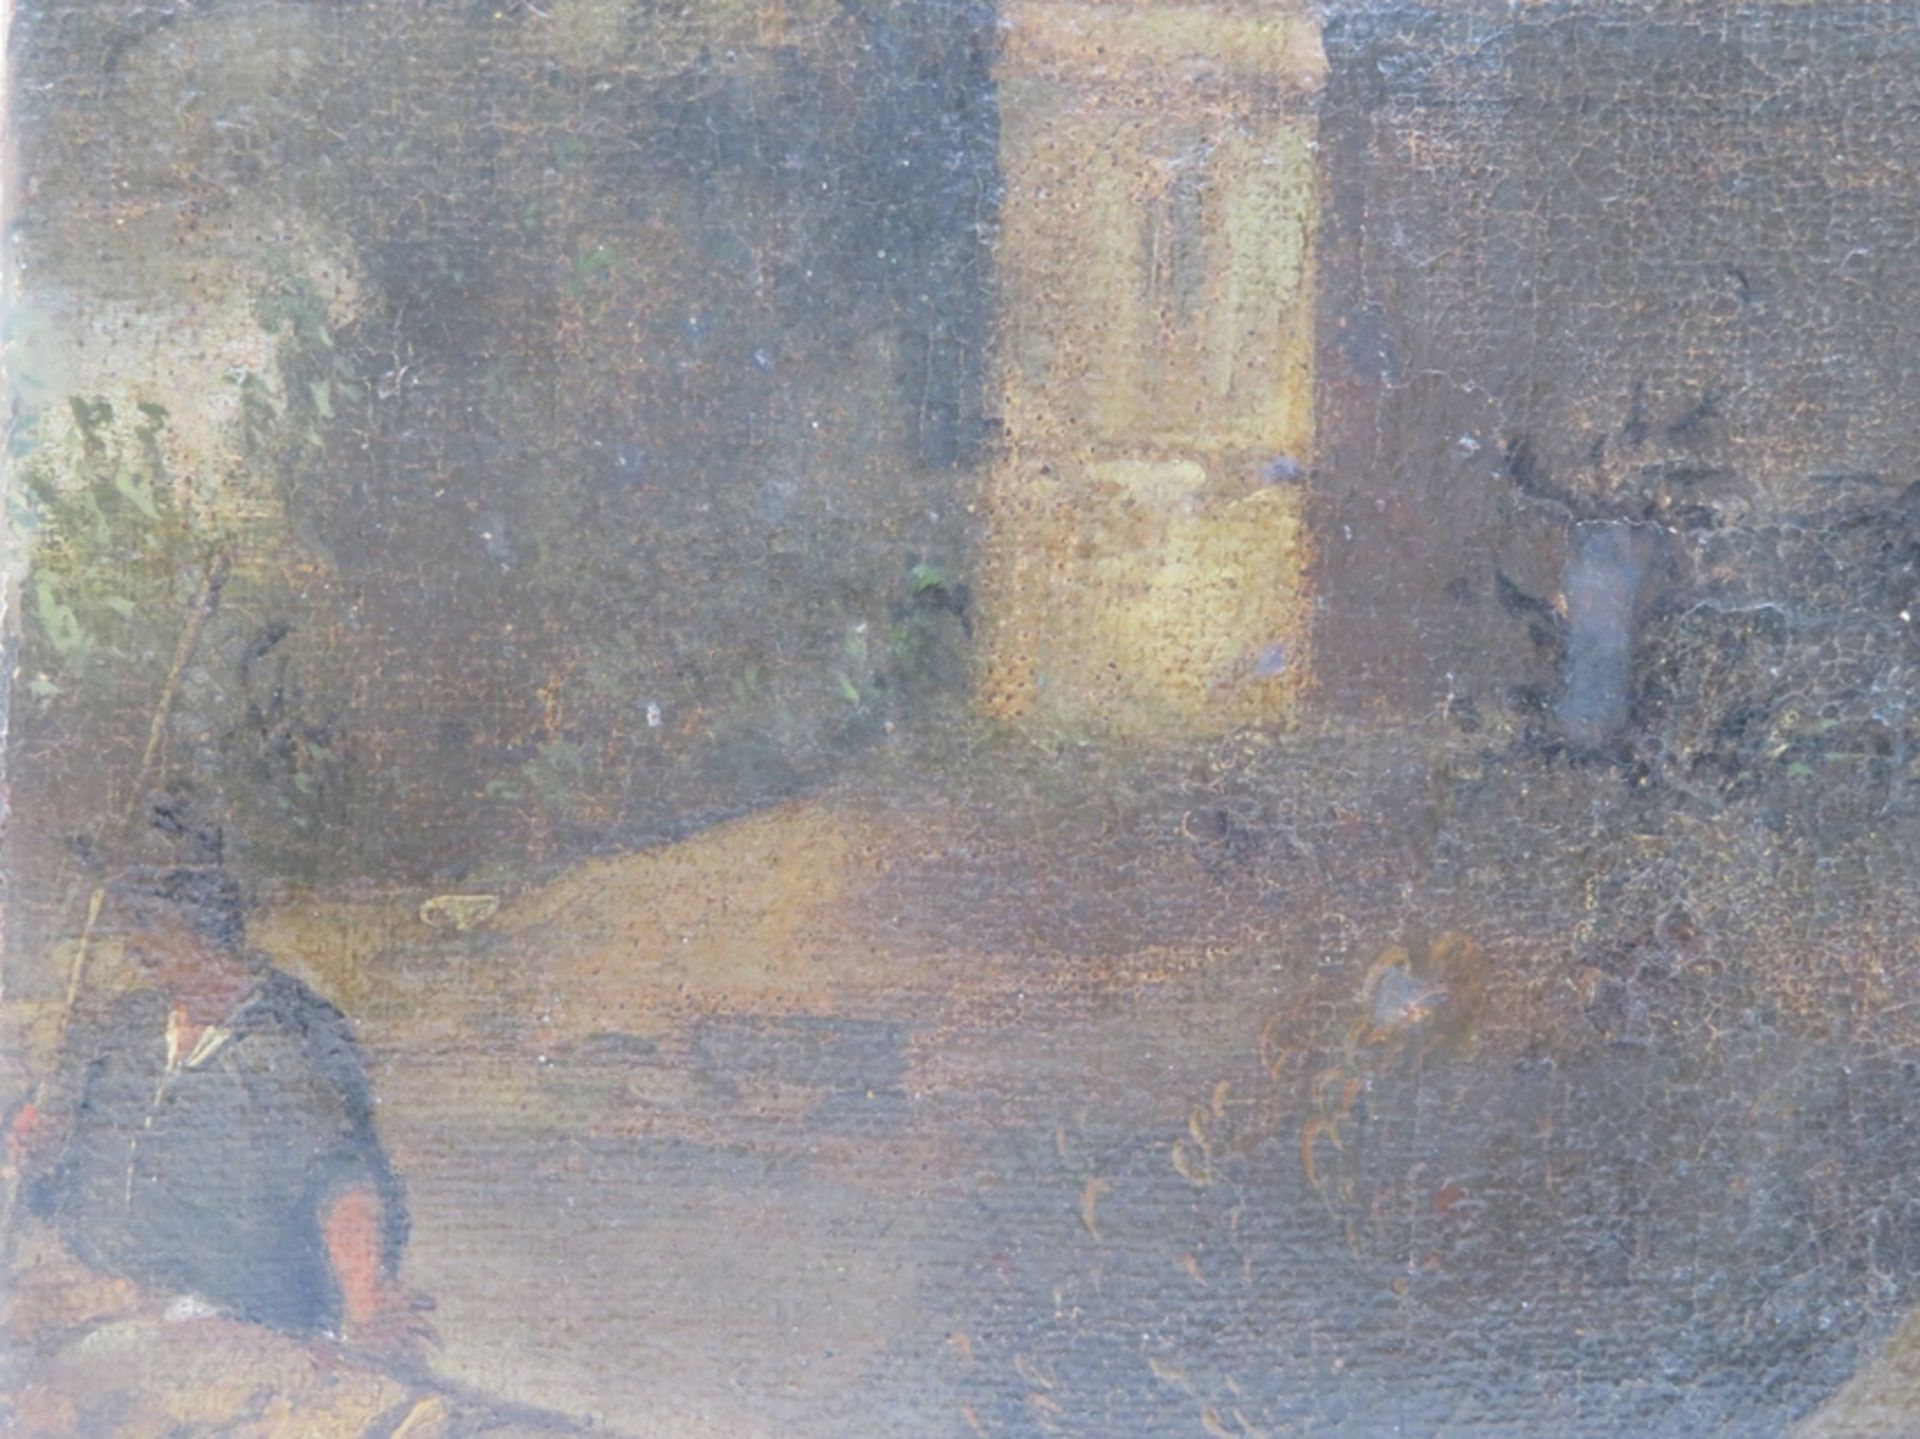 Unbekannt, 18./19. Jahrhundert, "Ruinenansicht", Öl/Leinwand, doubliert, 57 x 40 cm, o.R. - Bild 2 aus 3